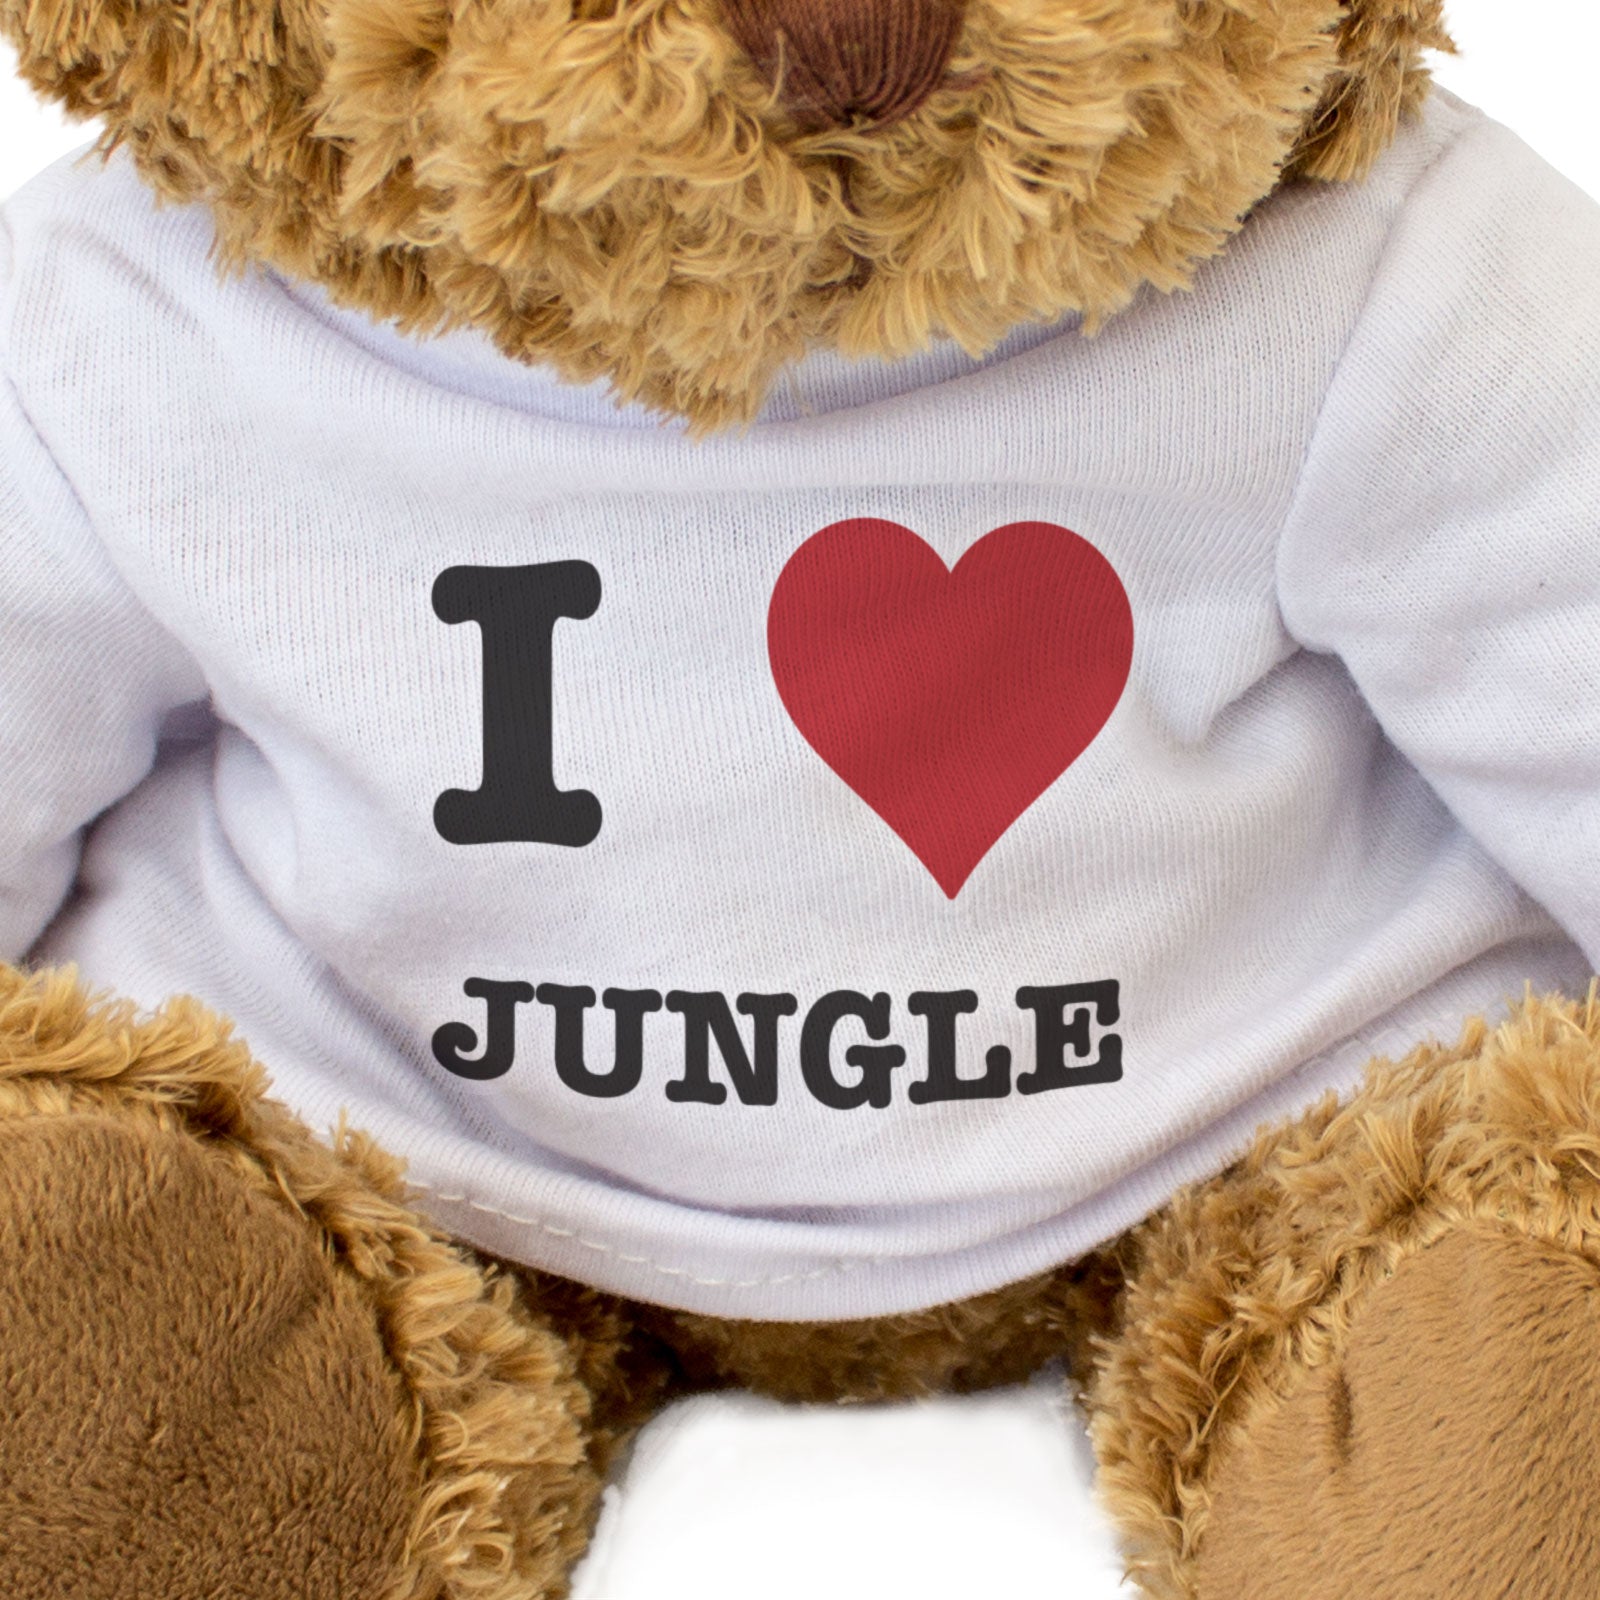 I Love Jungle - Teddy Bear